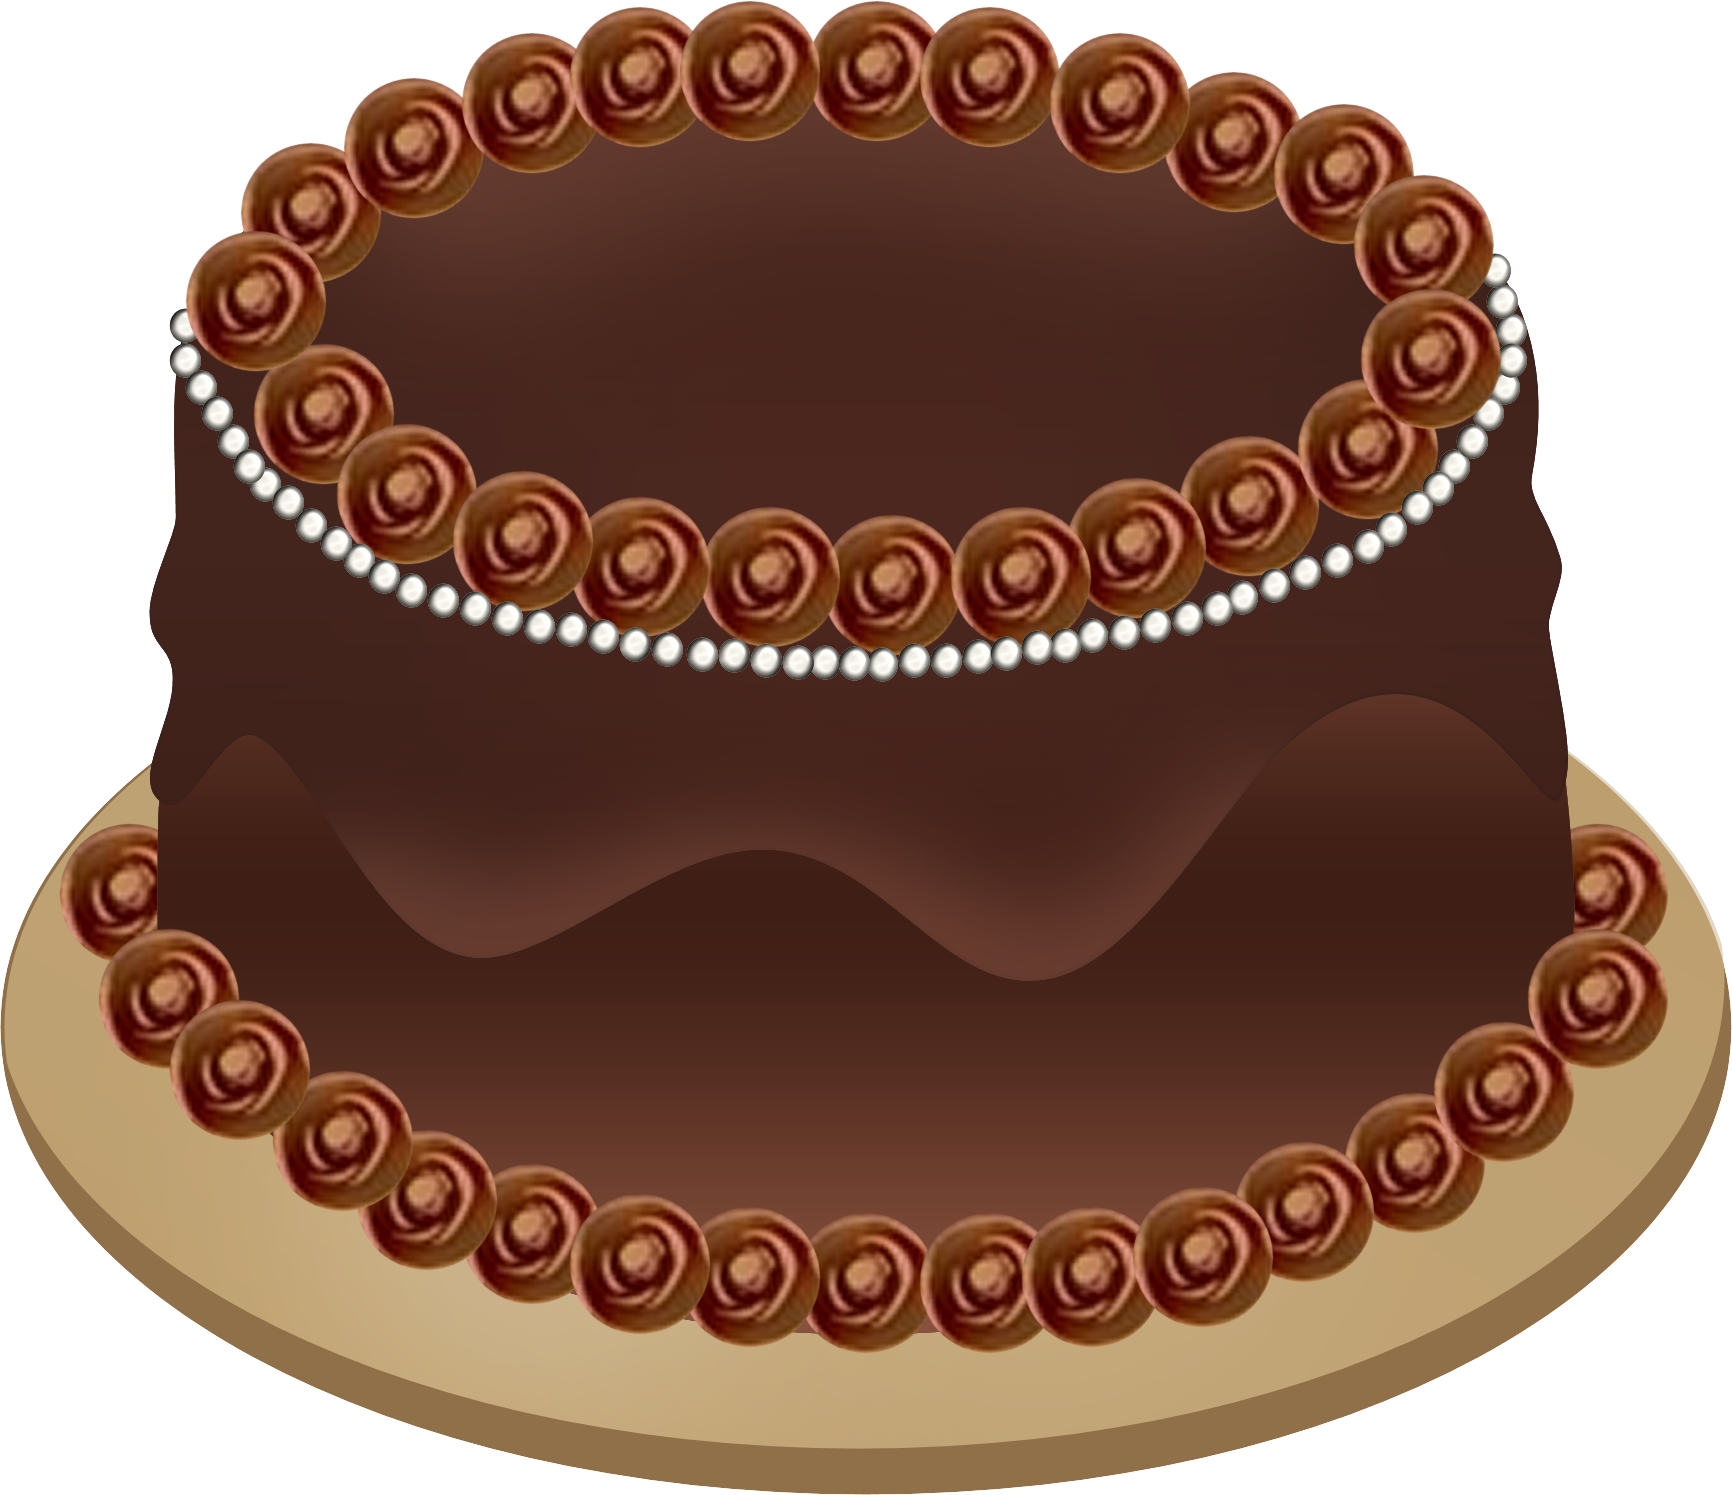 Chocolate cake clip art black and white danaspai top